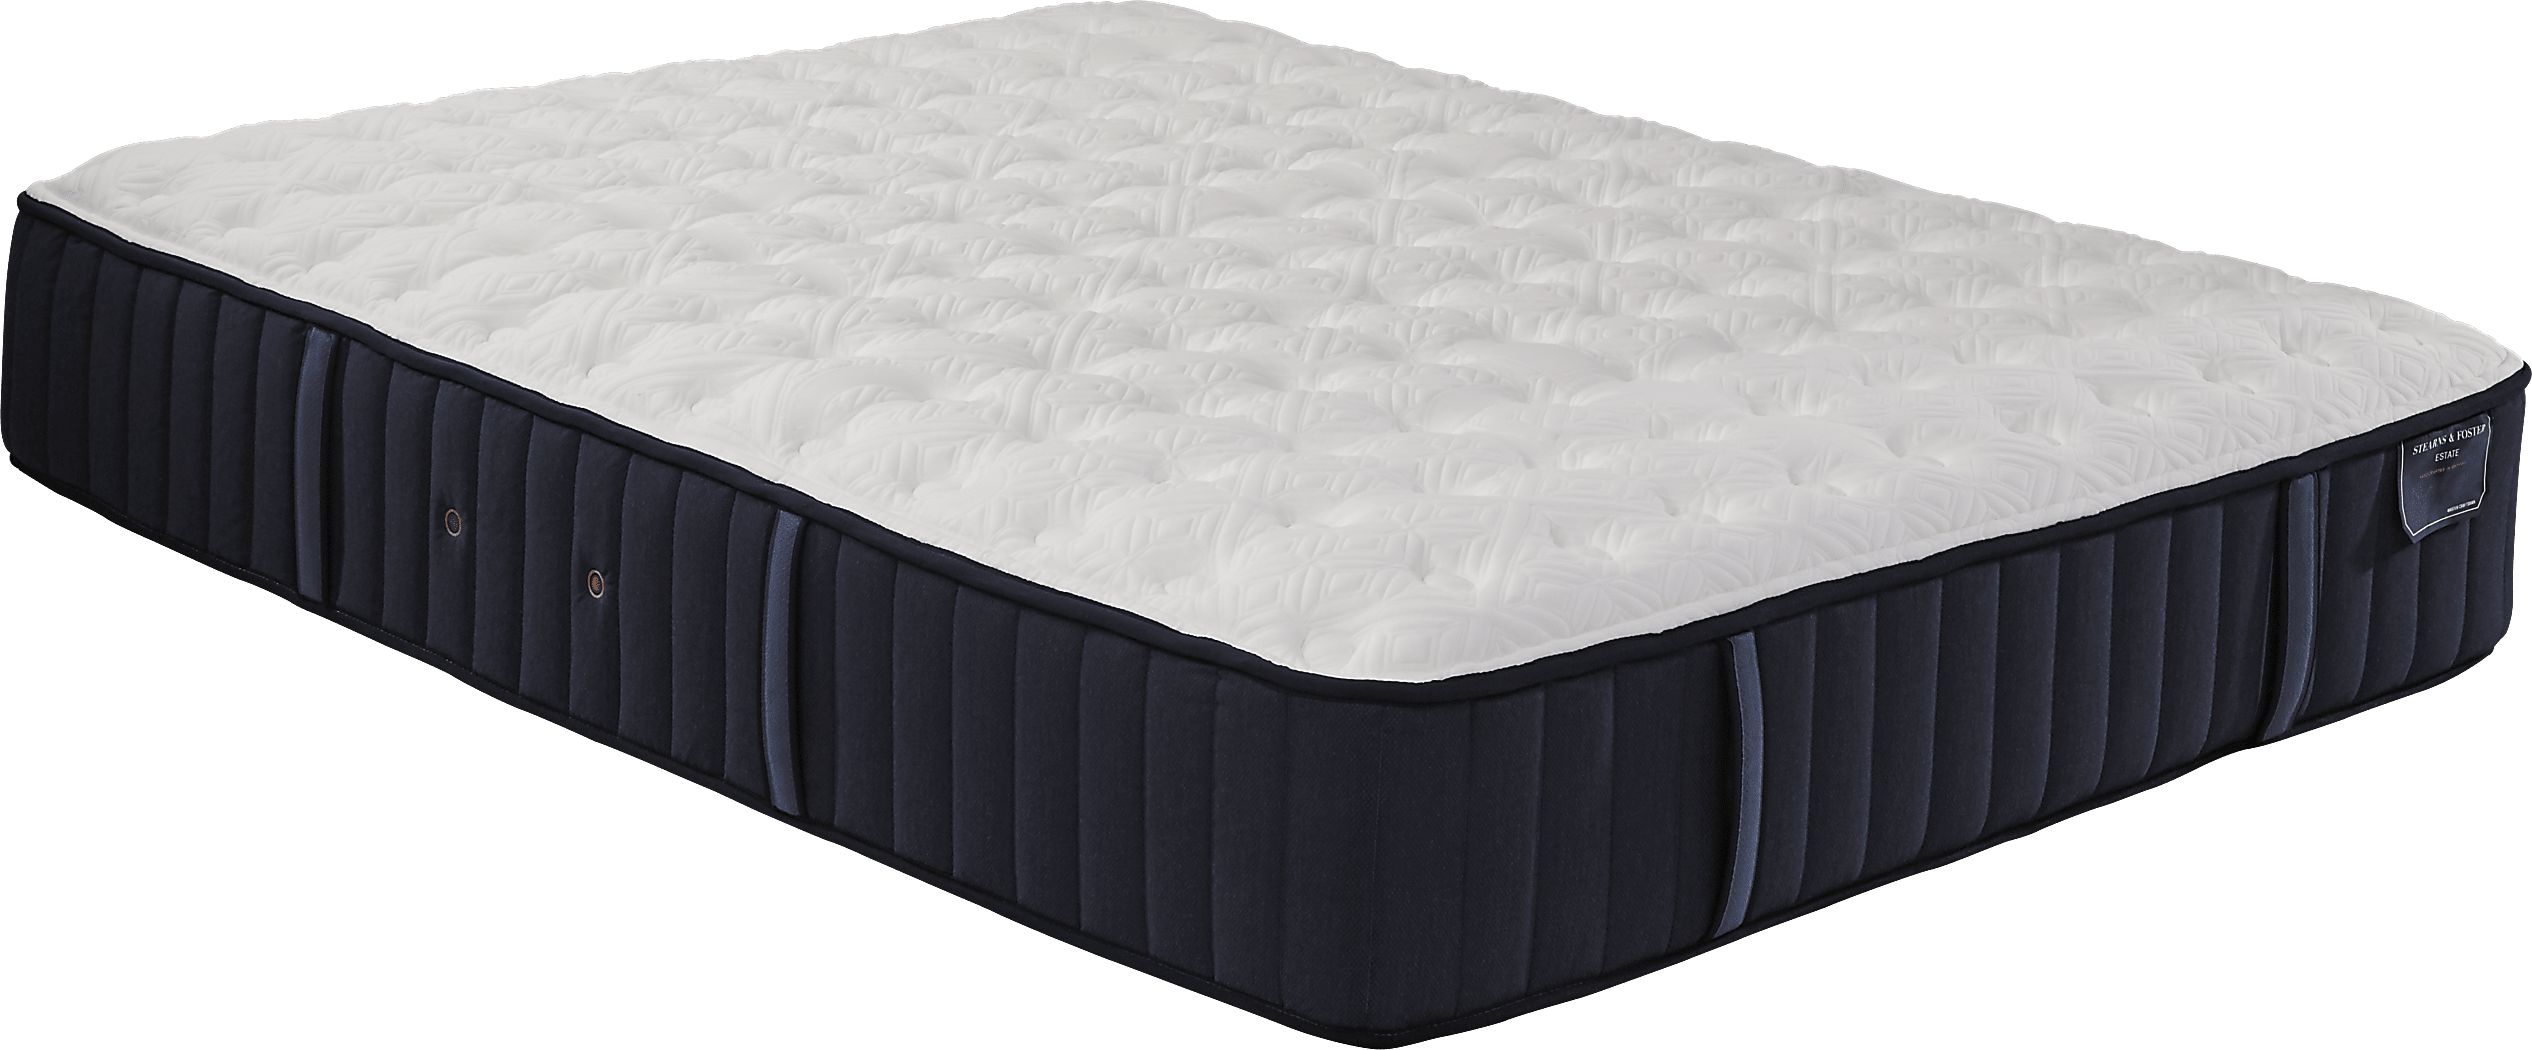 stearns and foster hurston cushion firm mattress